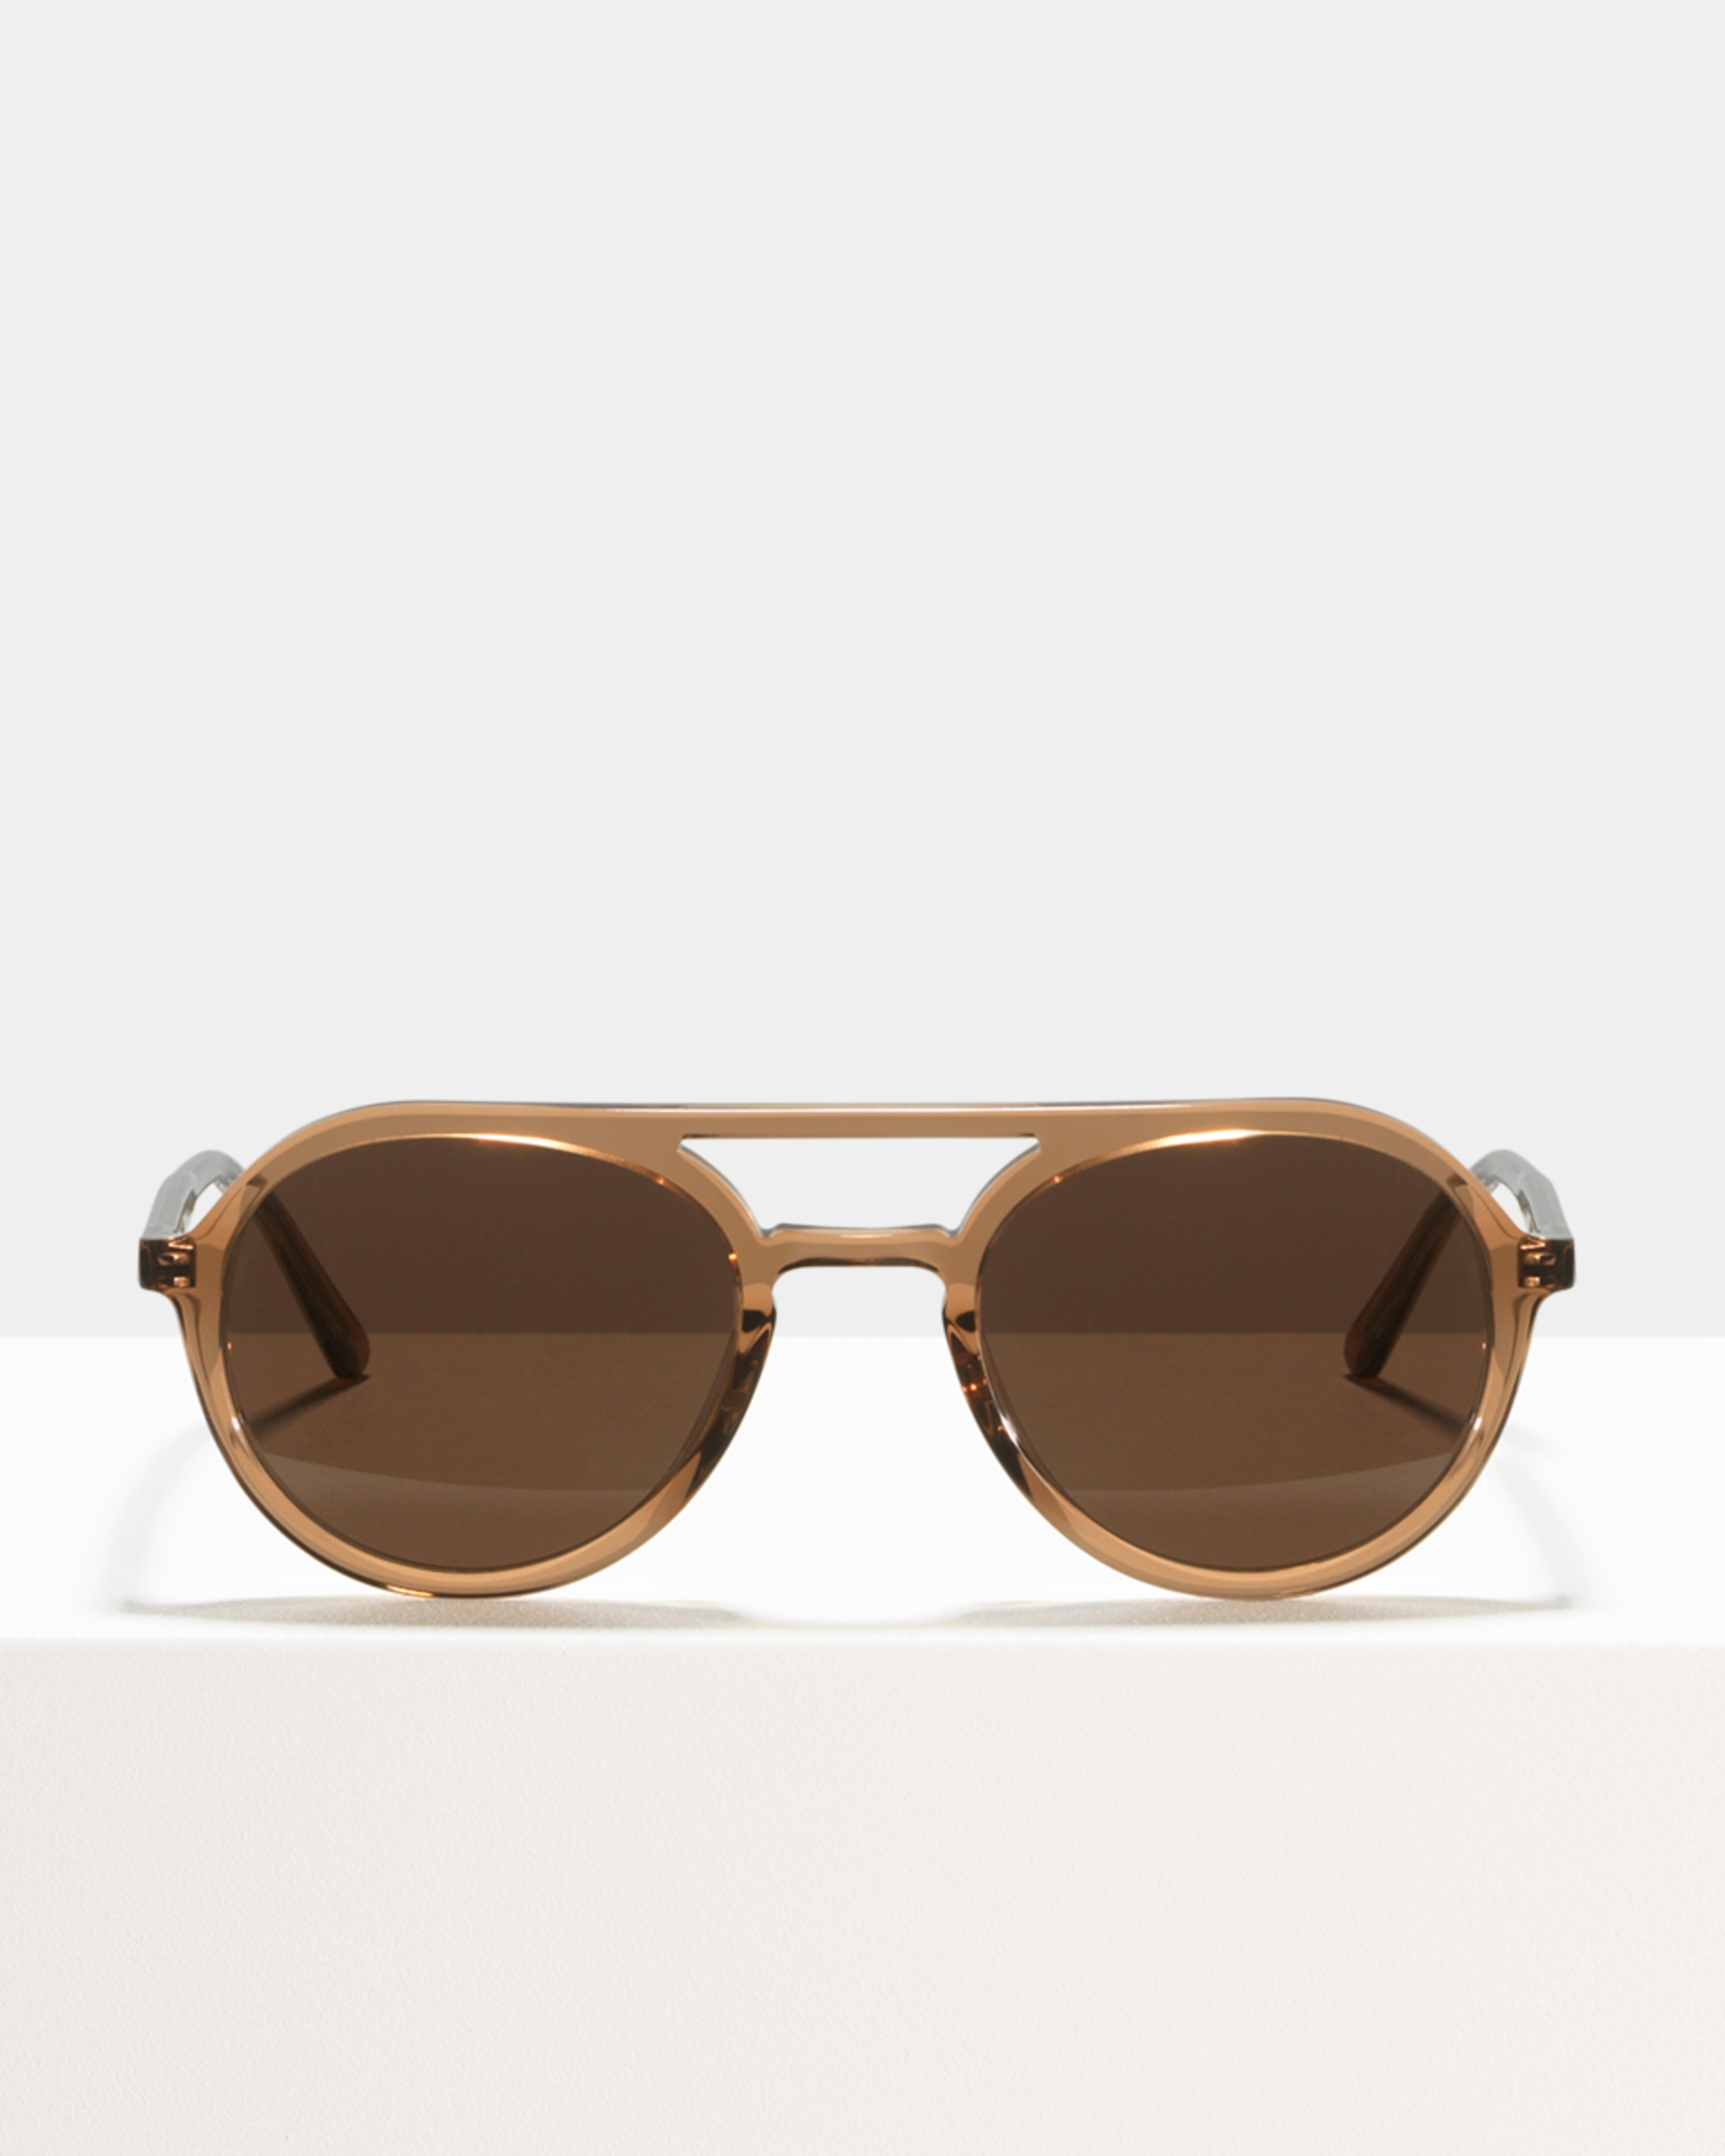 Ace & Tate Sunglasses |  Acetat in Braun